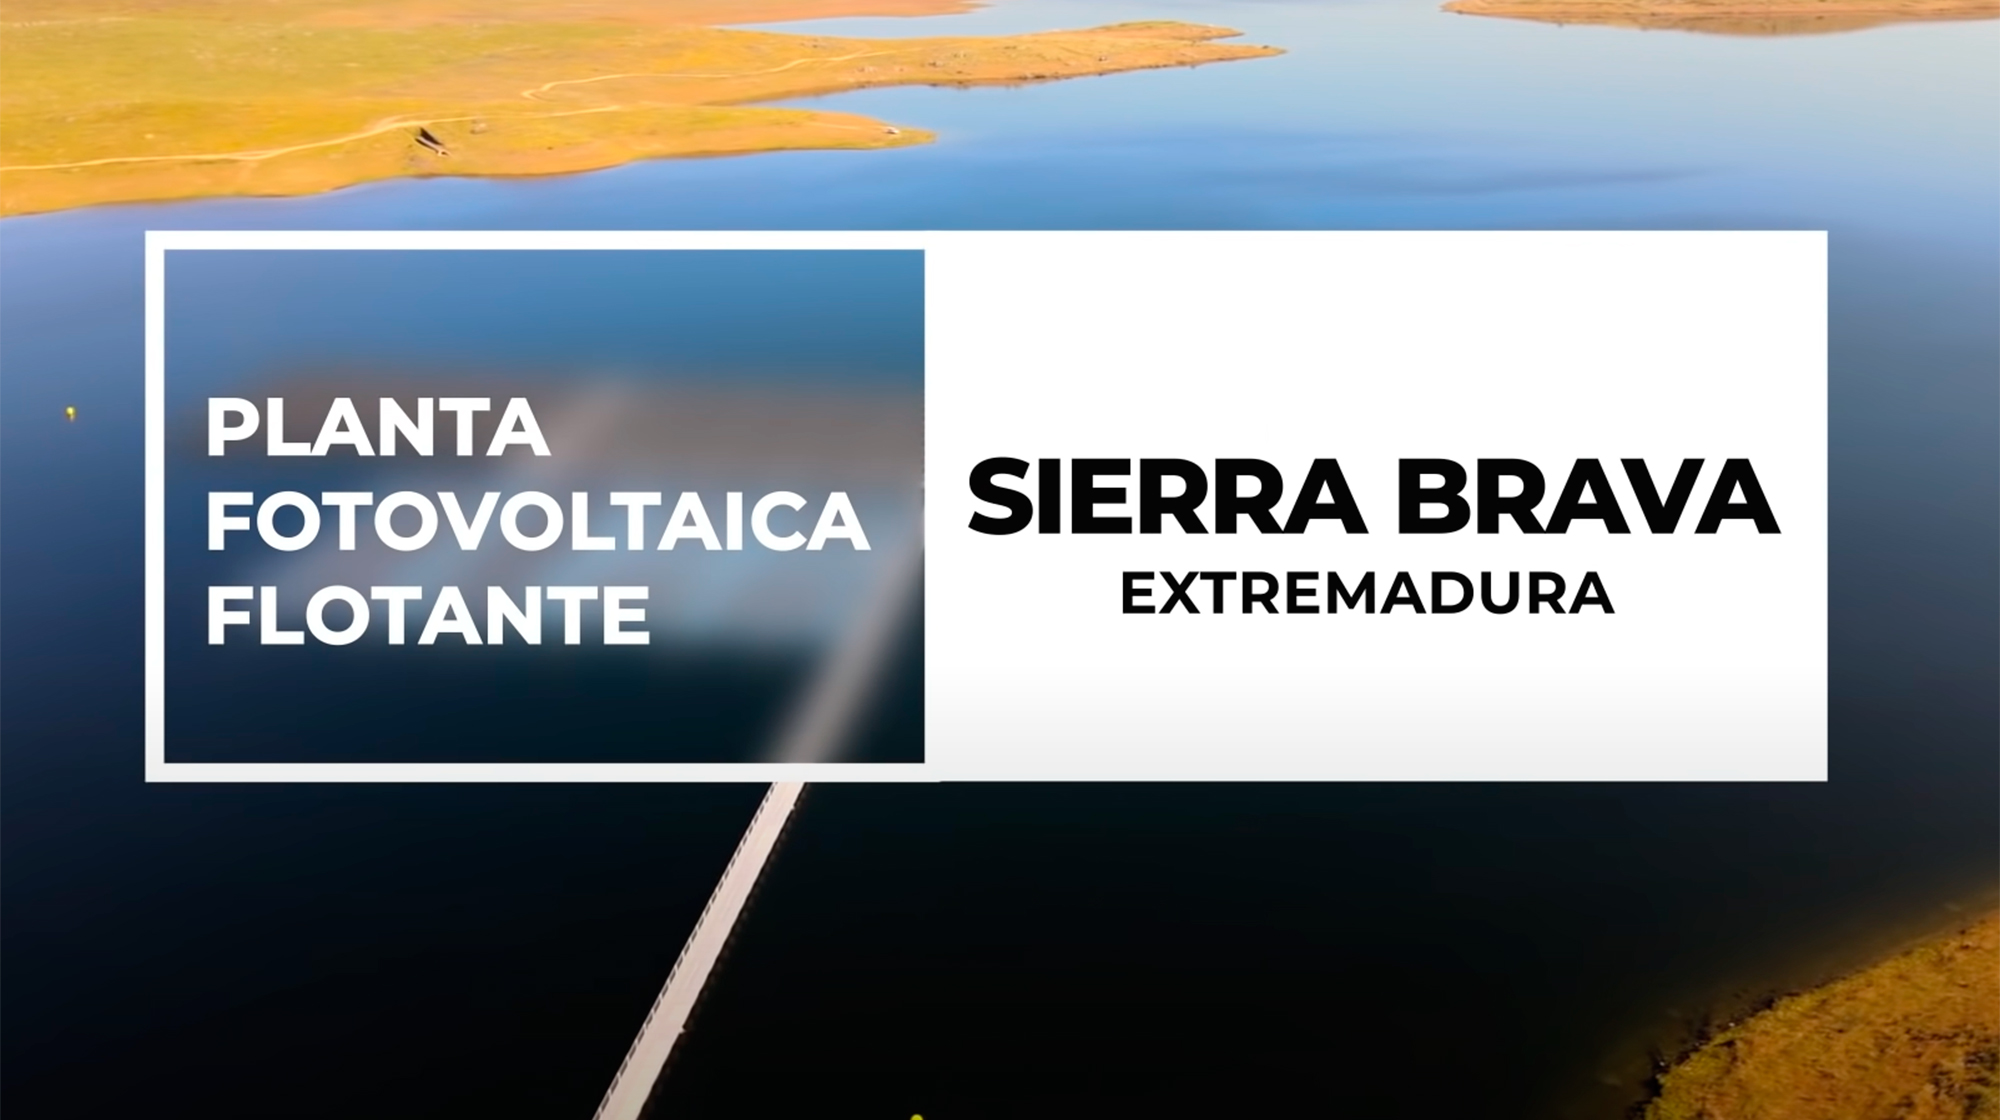 Planta Fotovoltaica Flotante Sierra Brava